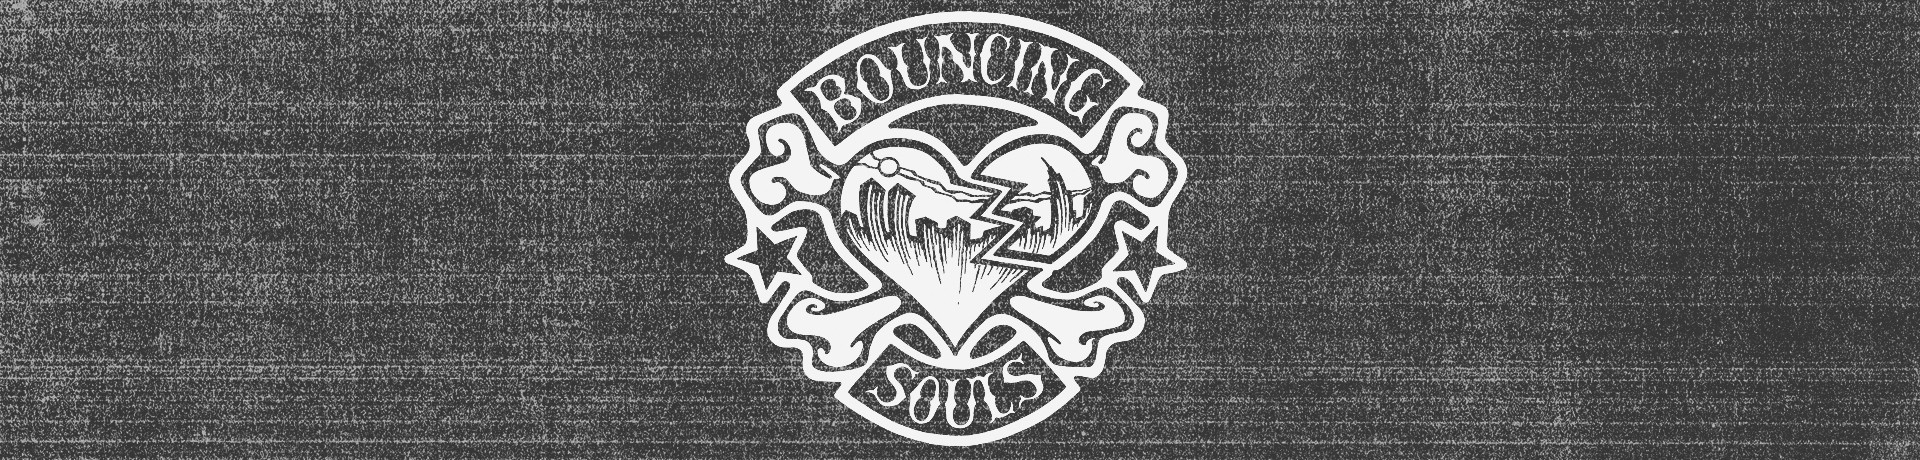 The Bouncing Souls - Do You Remember? Fifteen Years Of The Bouncing Souls [DVD Duplo]